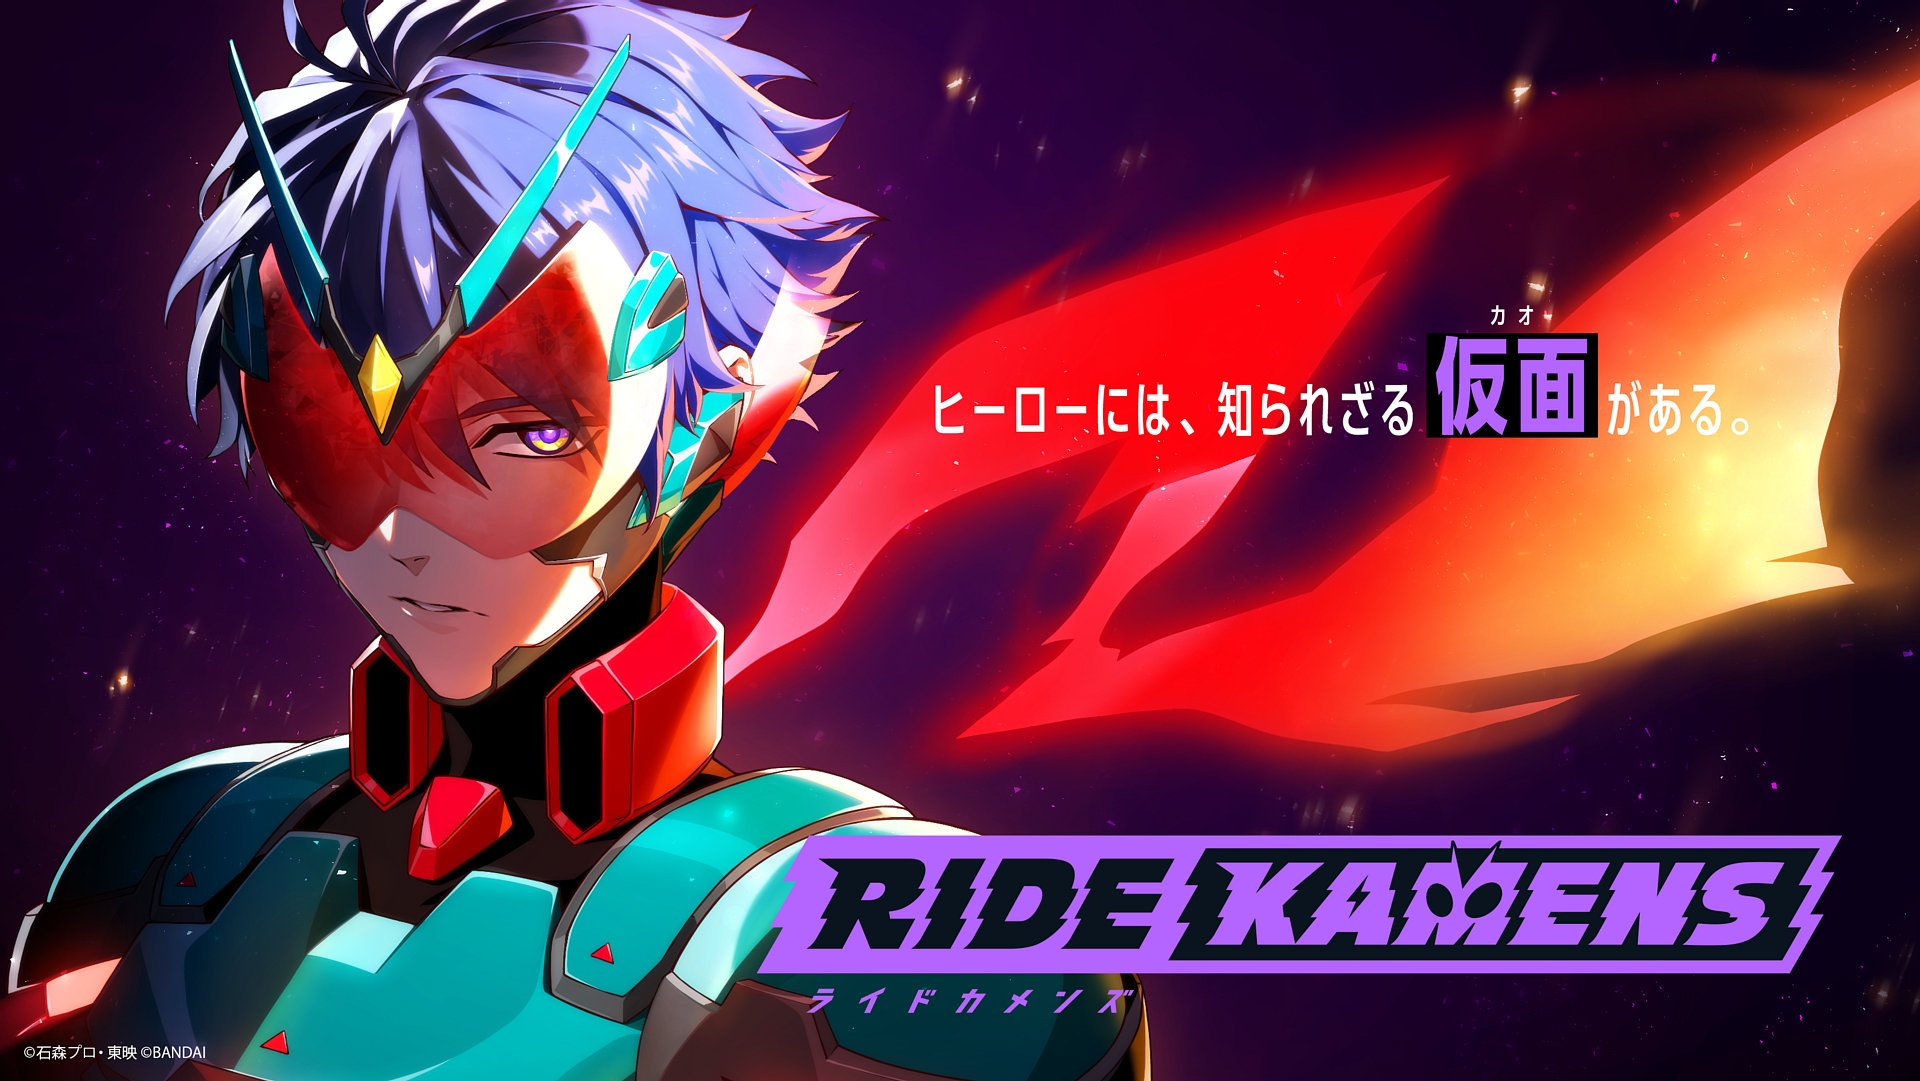 Ride Kamens - new Kamen Rider mobile game